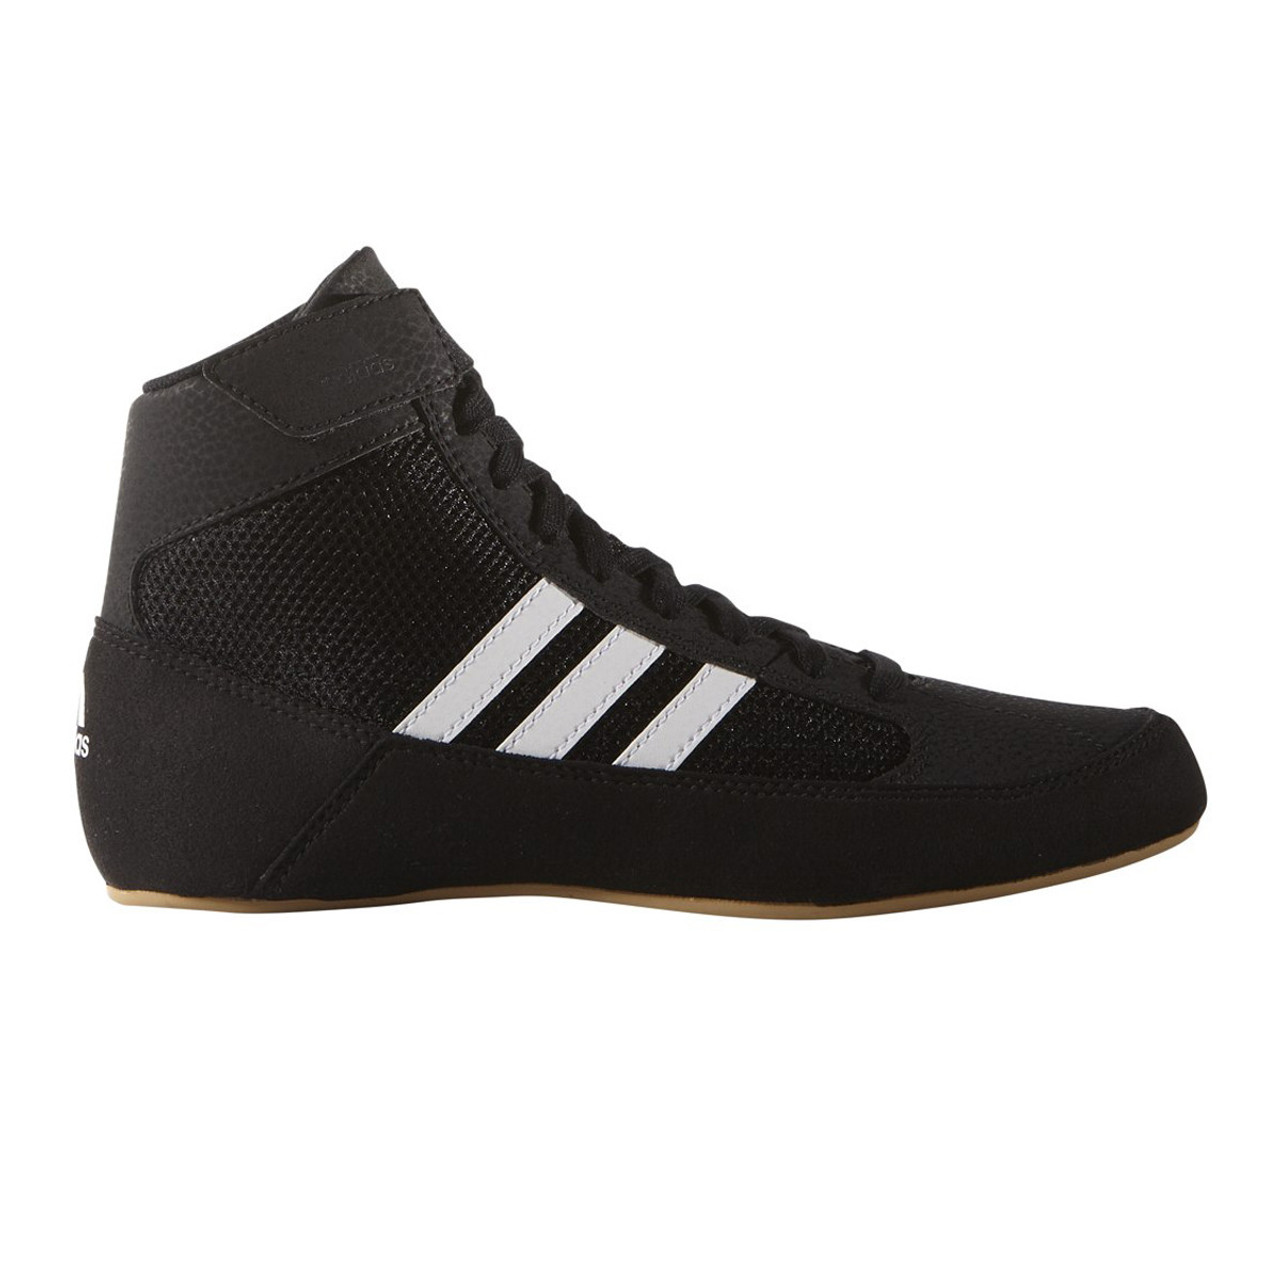 Adidas 2 Adult Wrestling Shoes Black, White